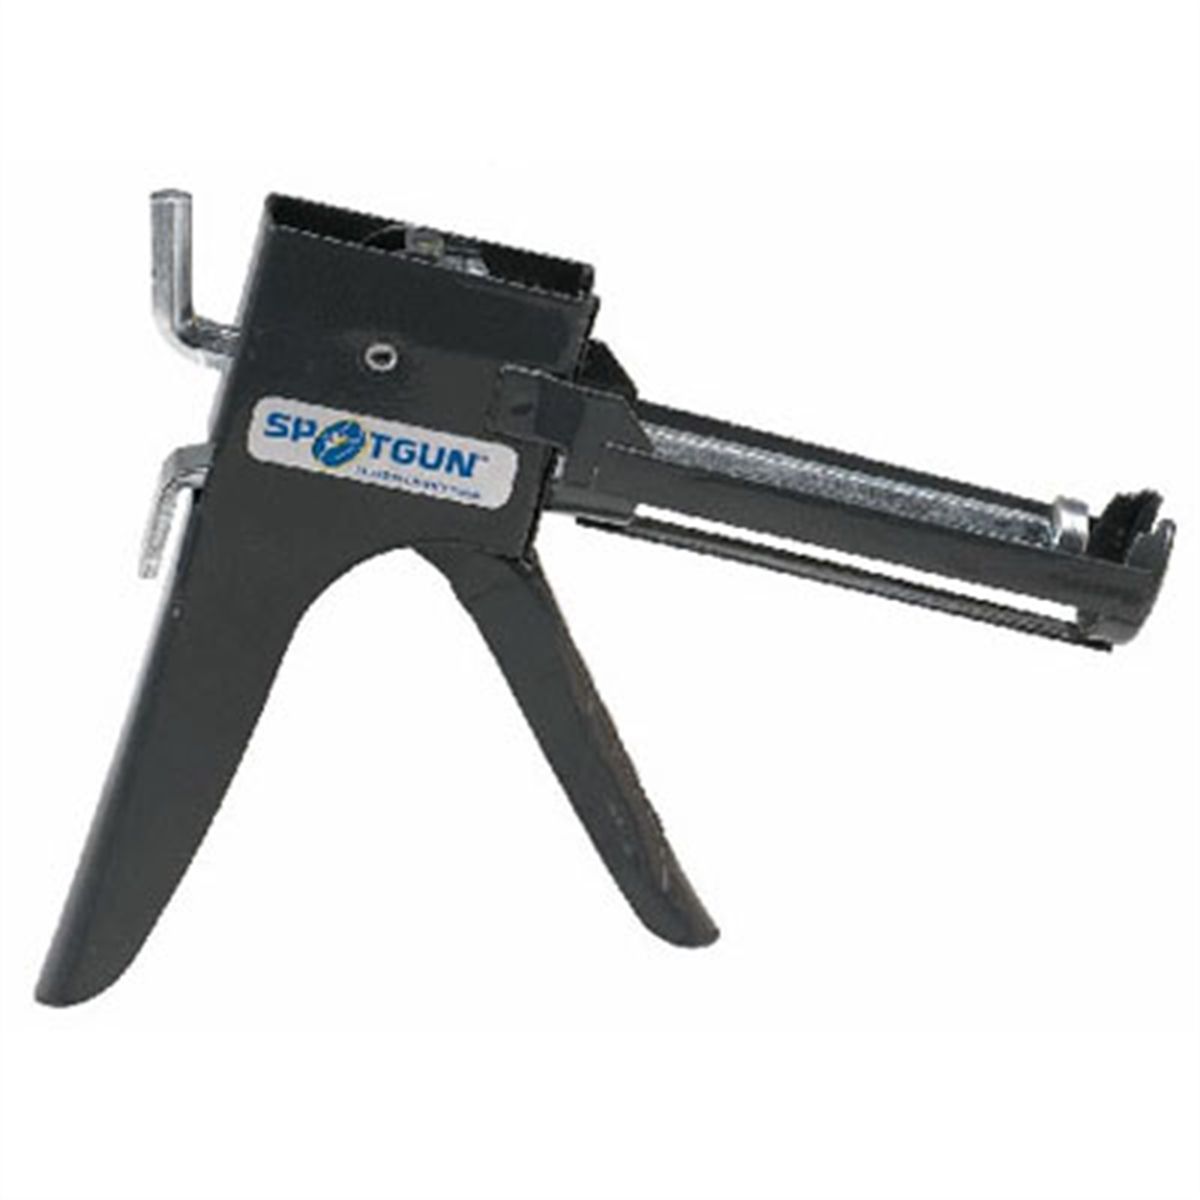 Jr Metal Spot Gun/ Injection Gun